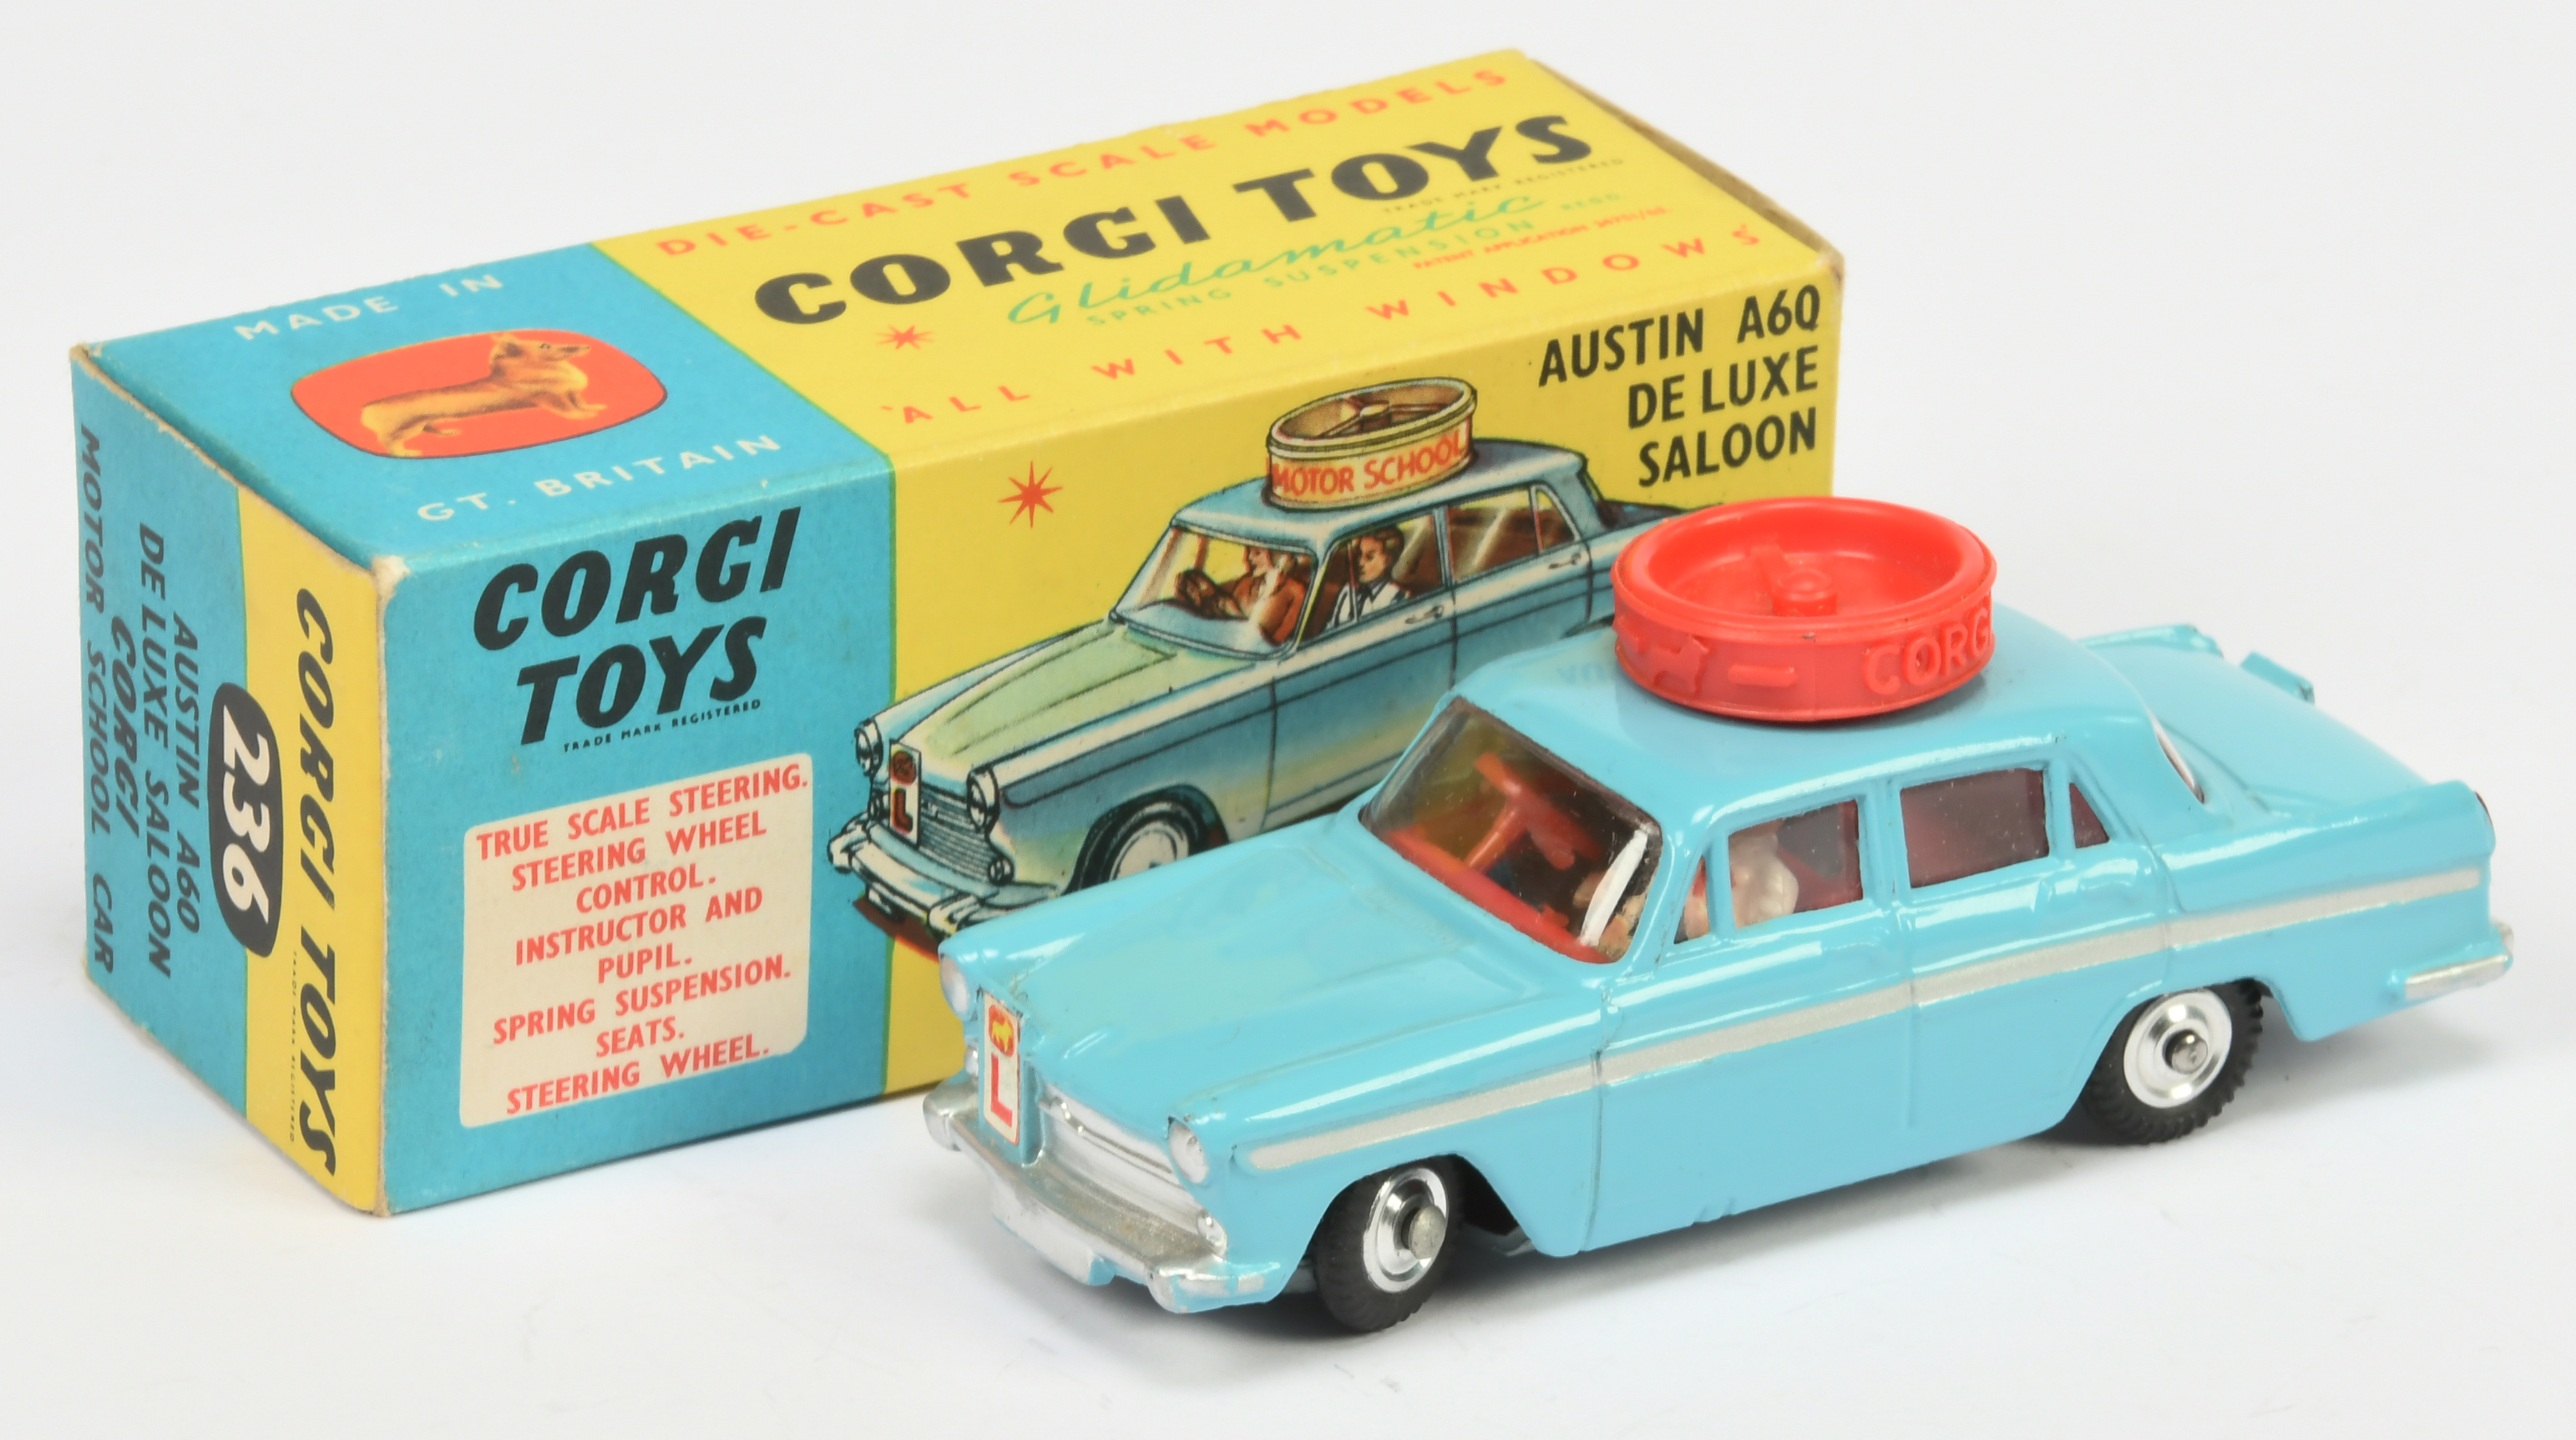 Corgi Toys 236 Austin A60 De-Luxe Saloon "Motor School" - Blue body, red interior and roof turnin...